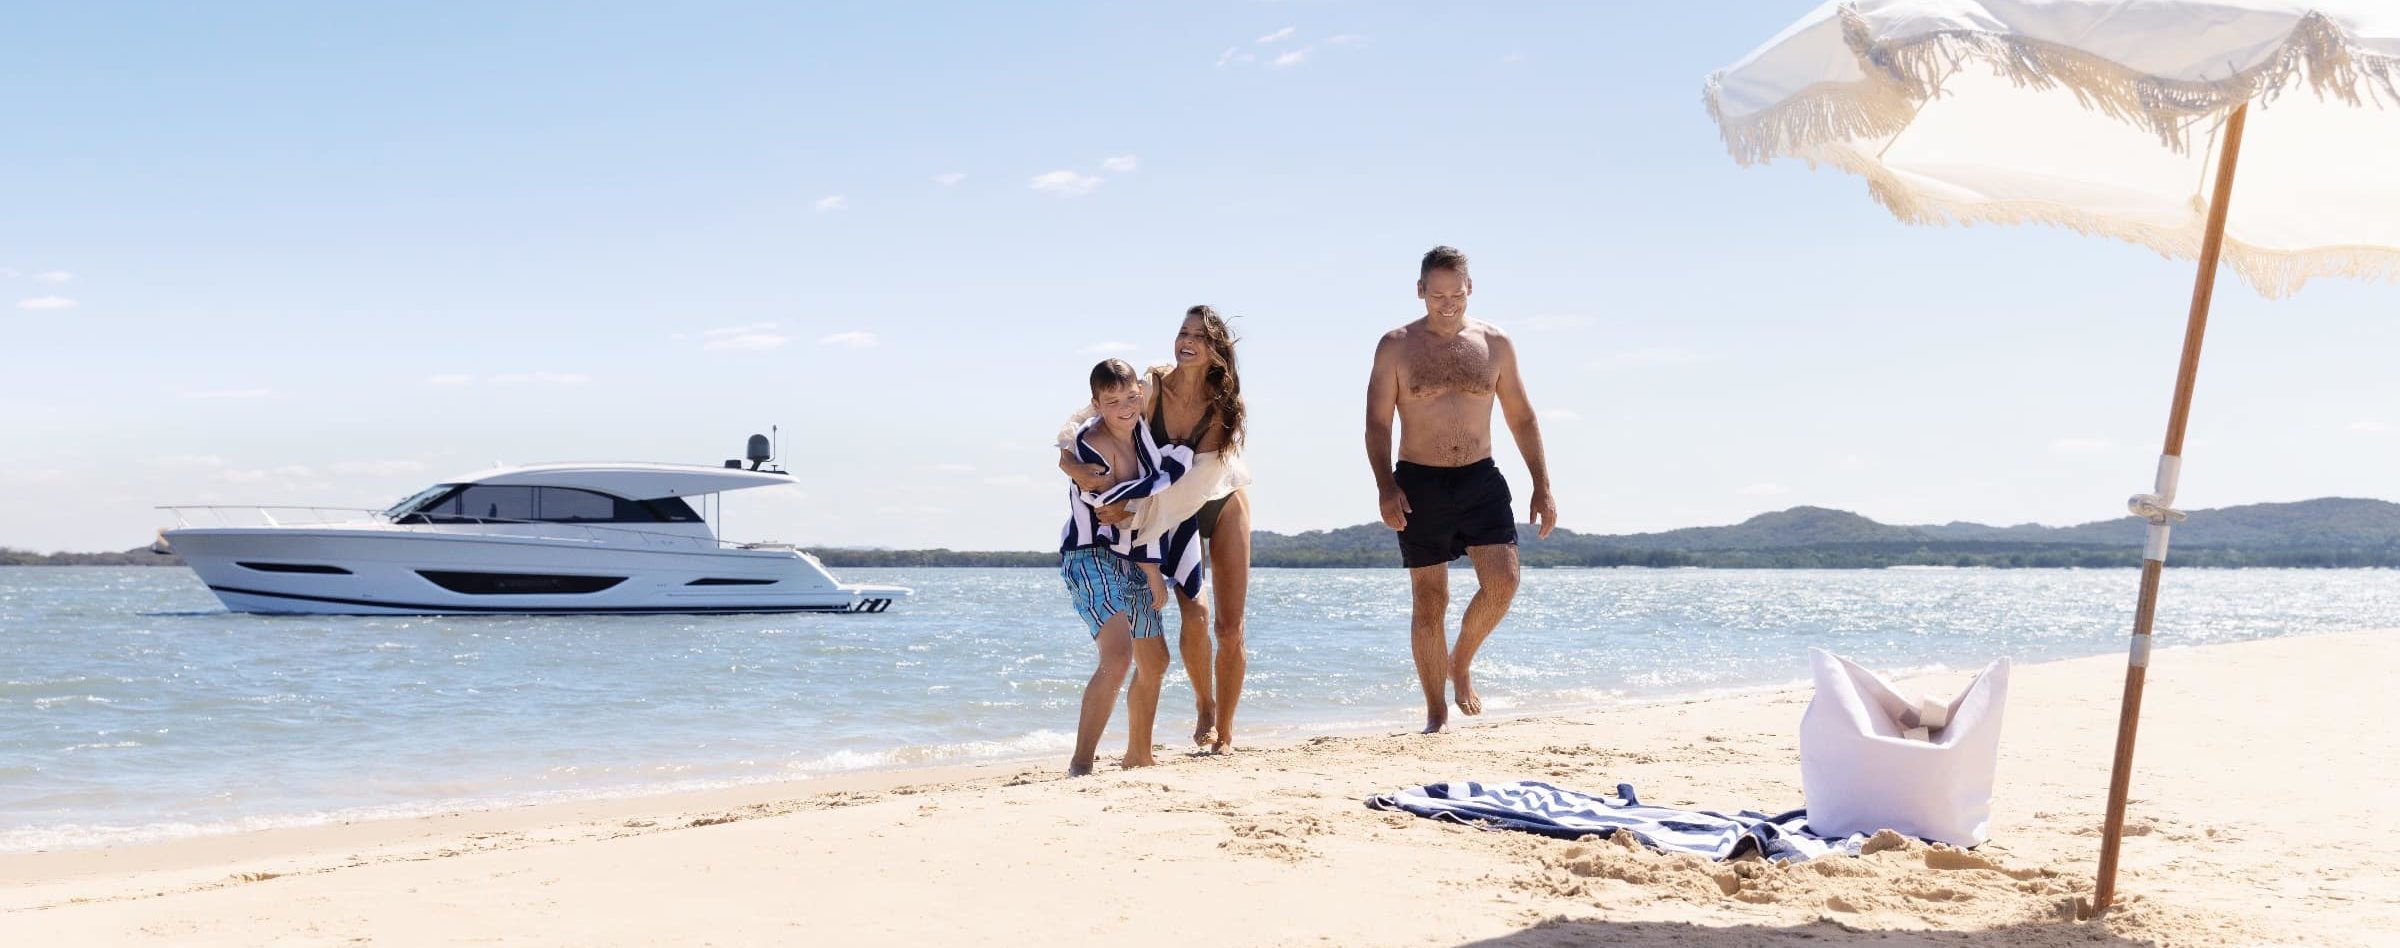 About Maritimo - Australia's Premier Luxury Yacht Builder